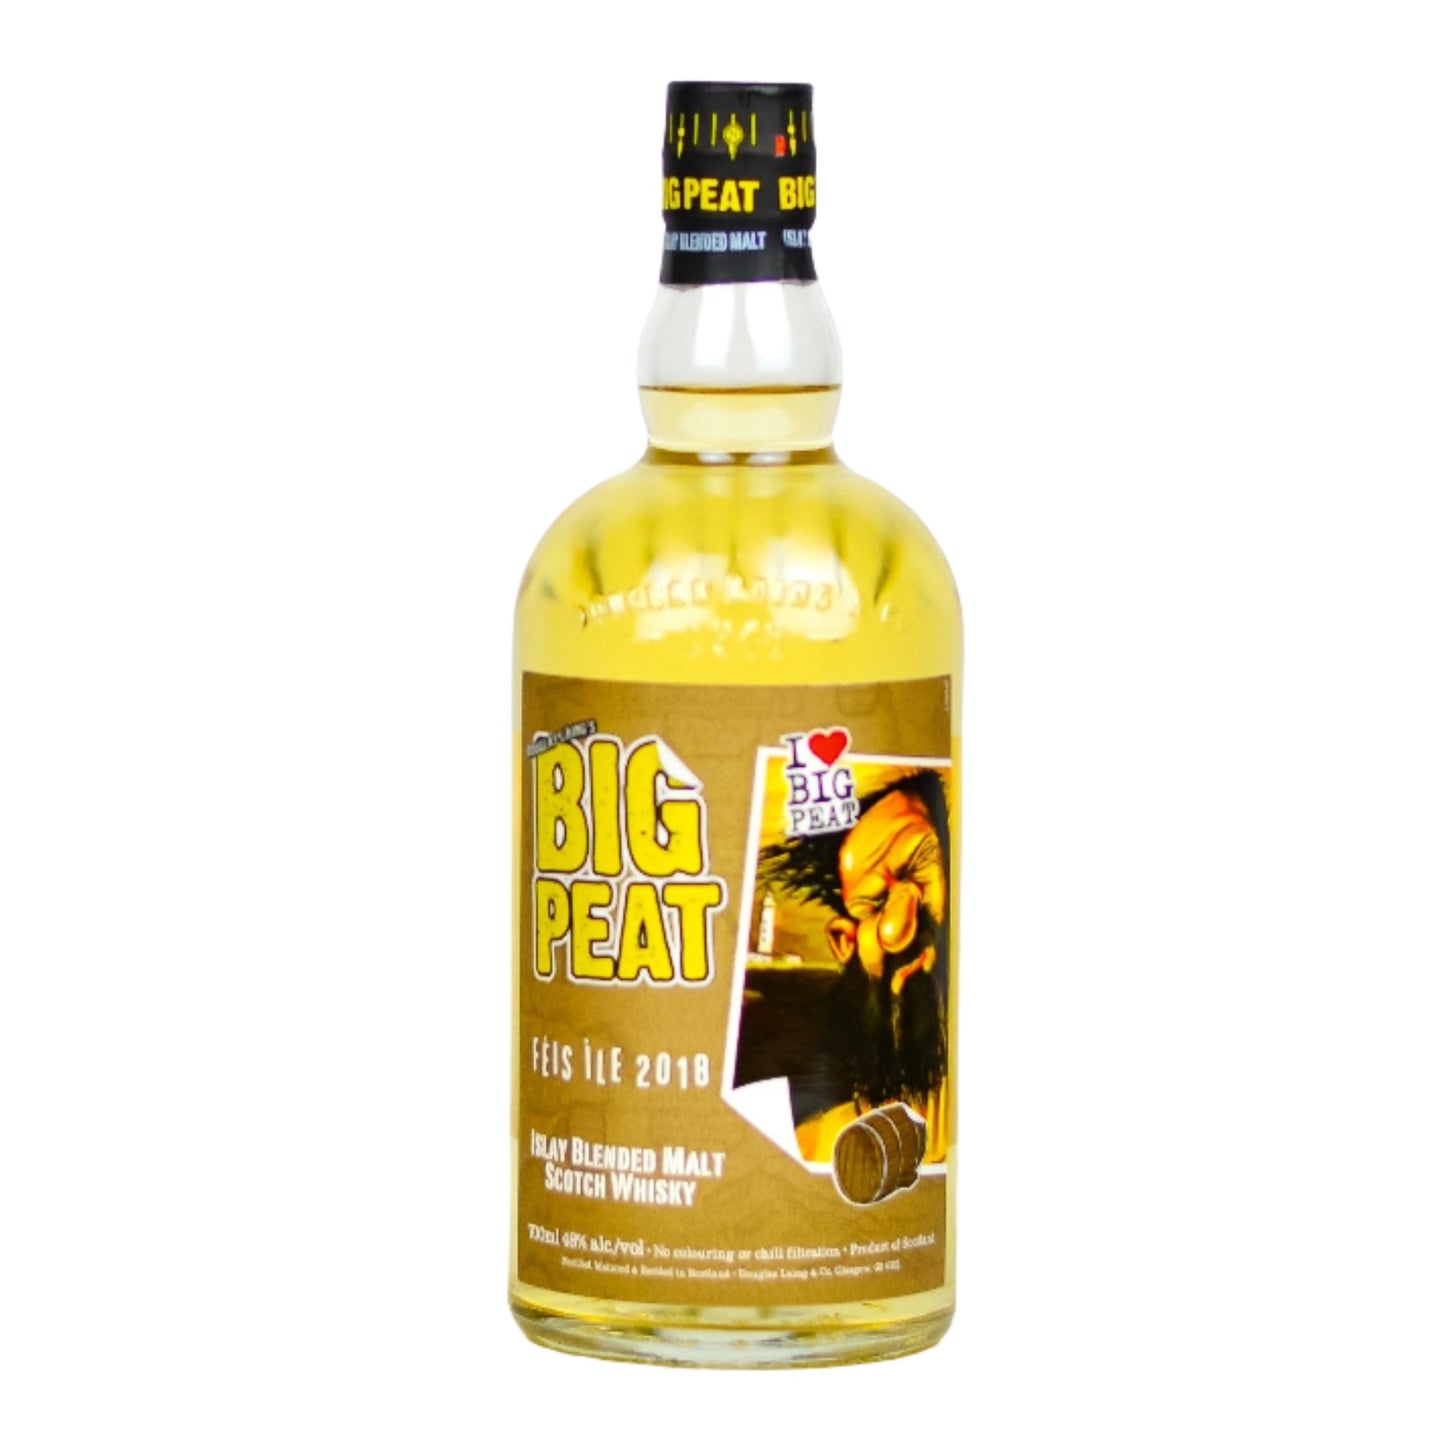 Big Peat Feis Ile 2018 - Whisky Grail